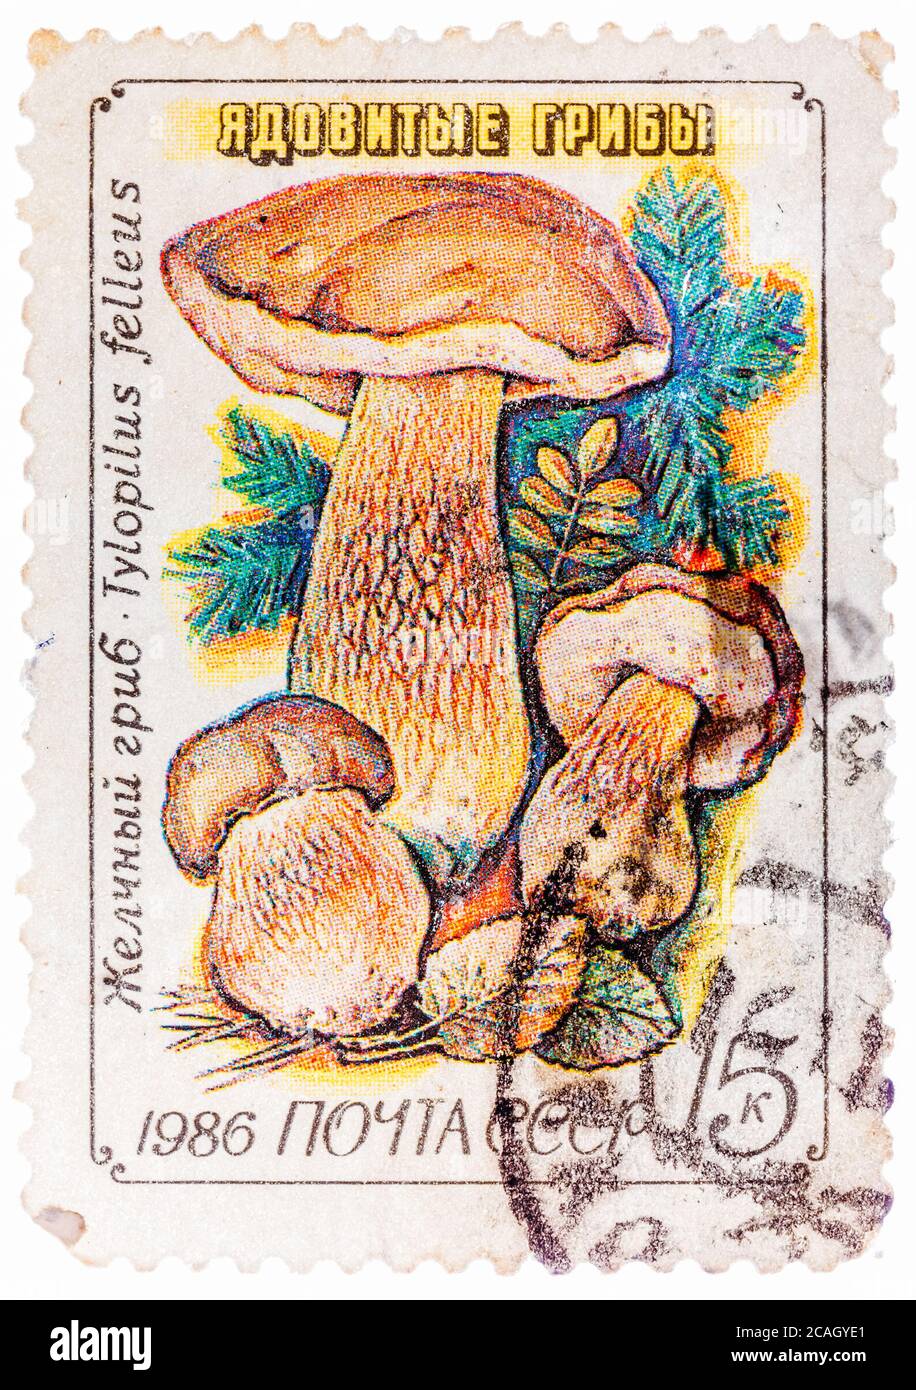 Stamp printed in USSR, Tylopilus felleus, formerly Boletus felleus mushroom in wild Stock Photo